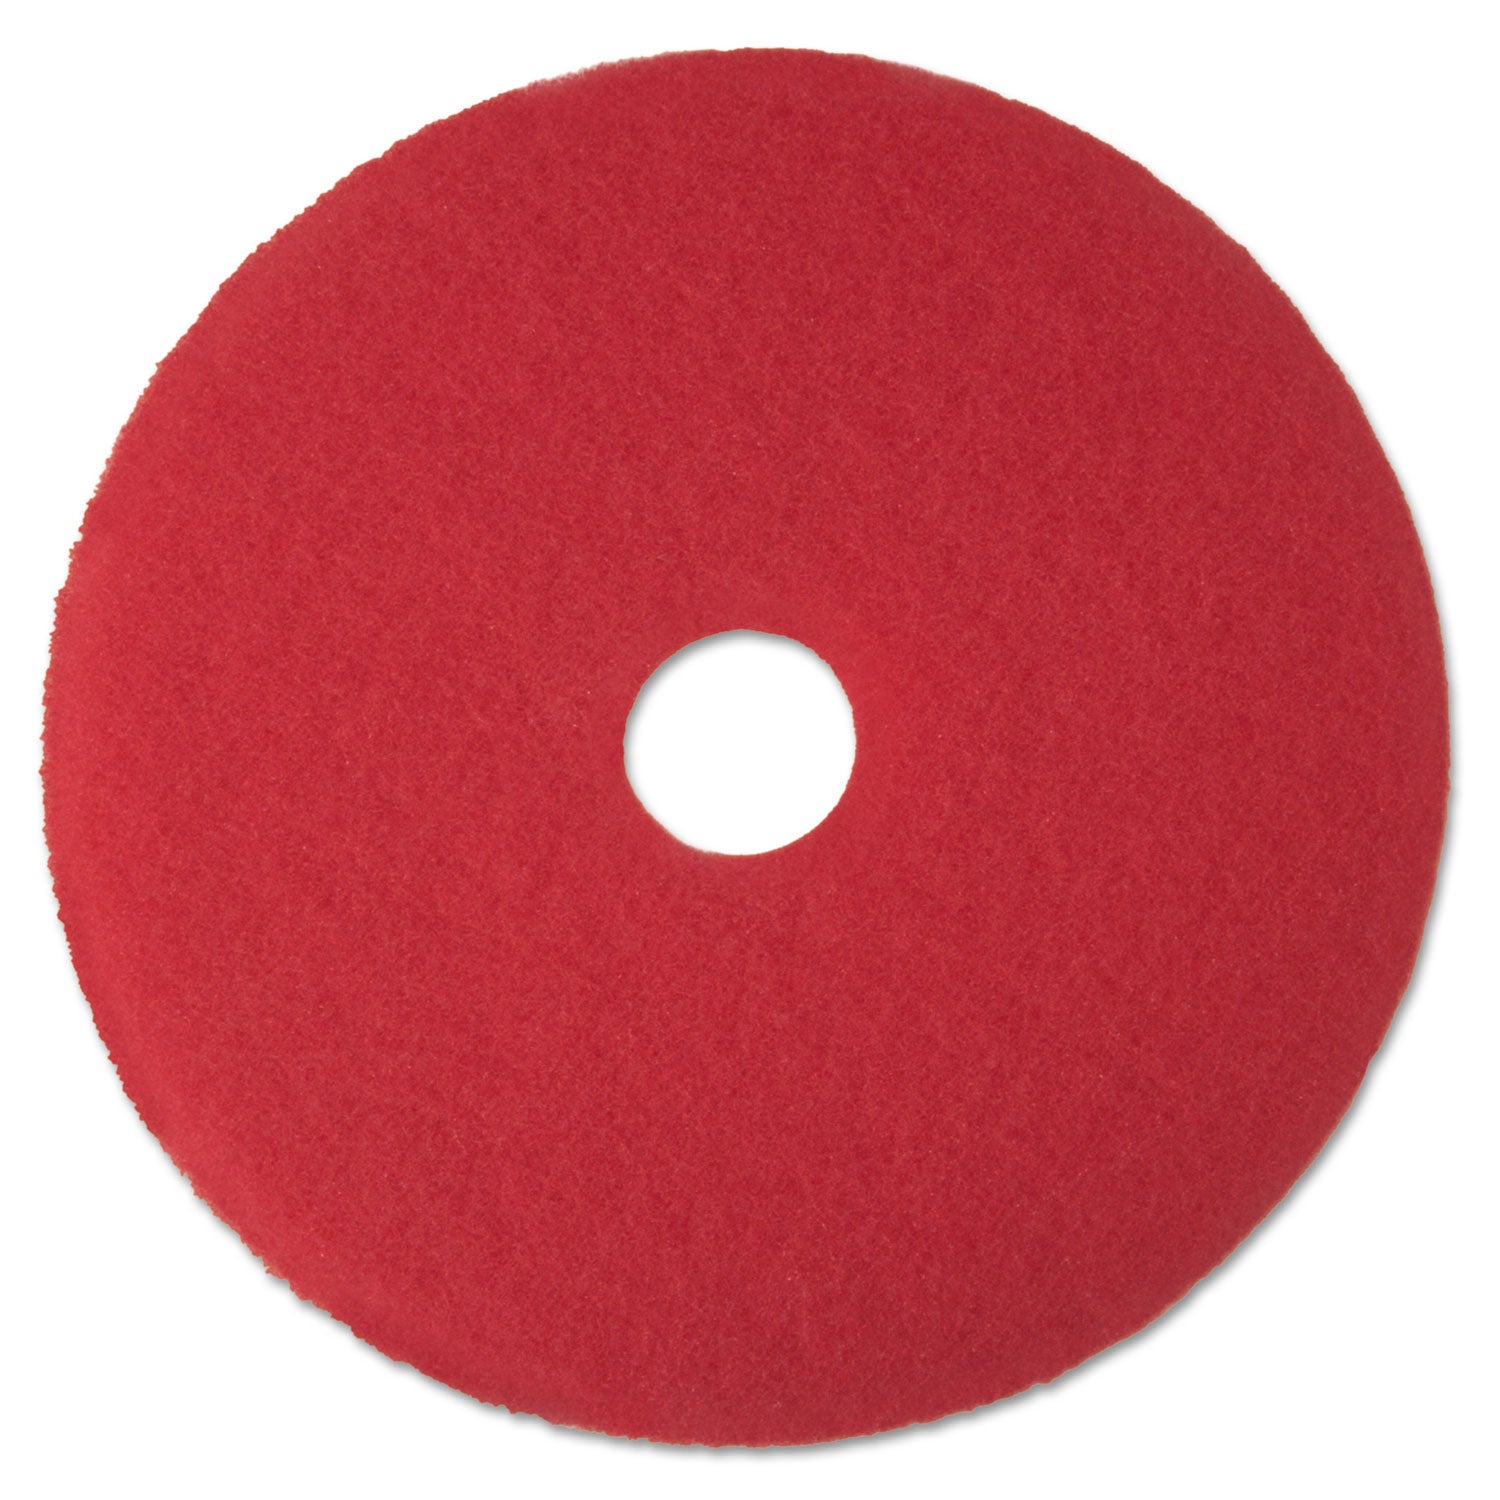 Low-Speed Buffer Floor Pads 5100, 13" Diameter, Red, 5/Carton - 